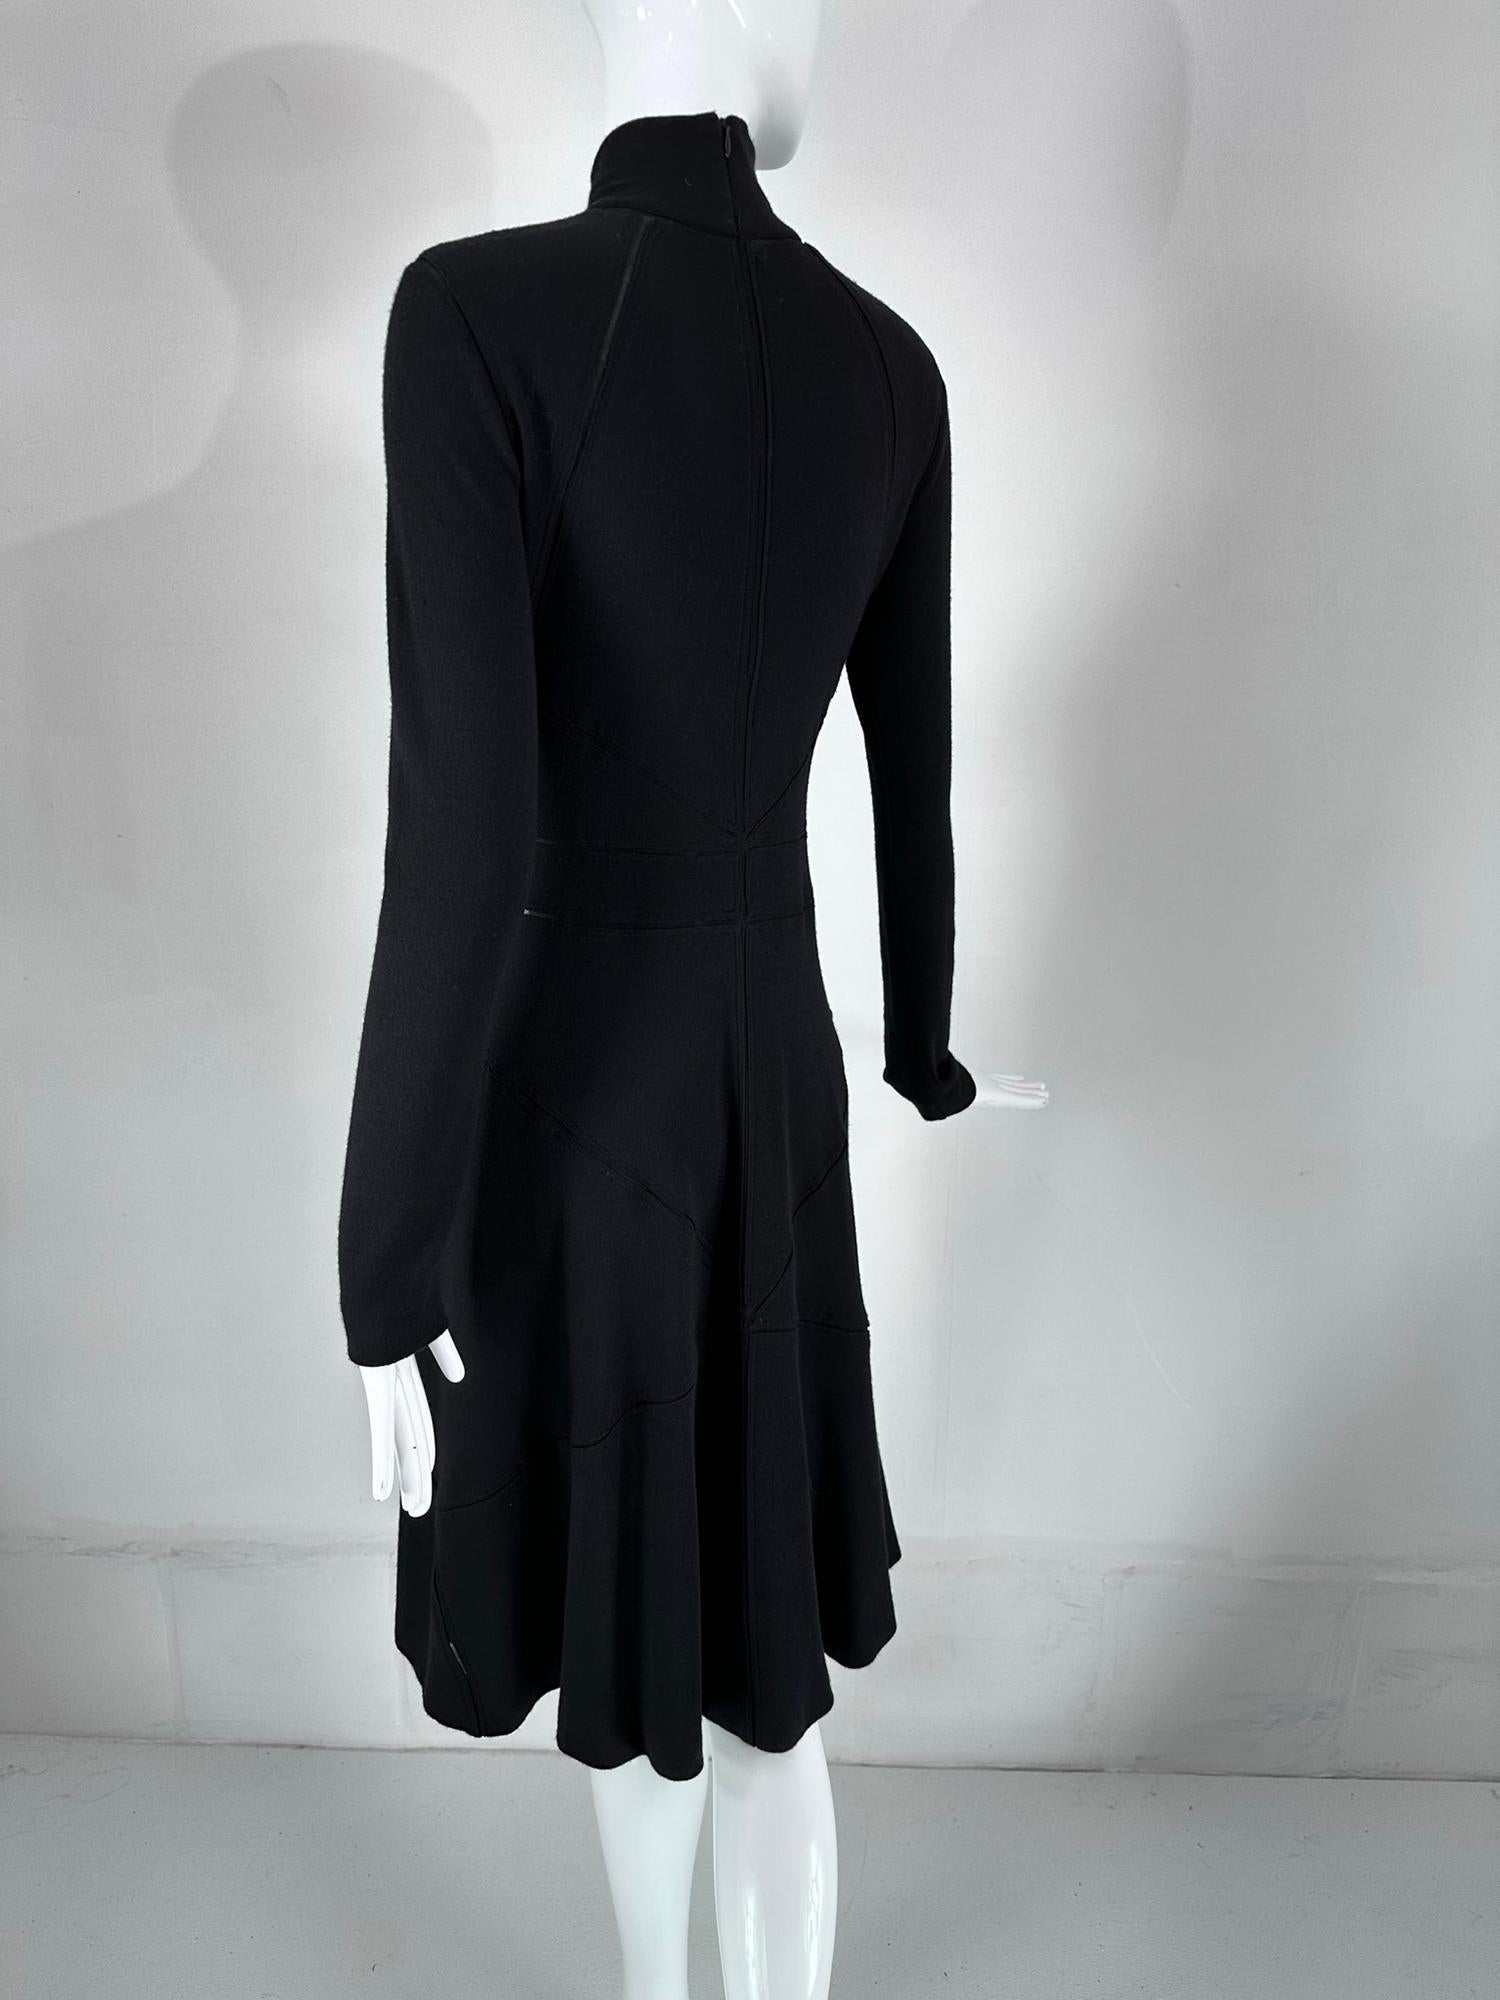 Calvin Klein 1990s Cashmere Blend Bias sheer Seam Classic Fit & Flair Dress 8 For Sale 2